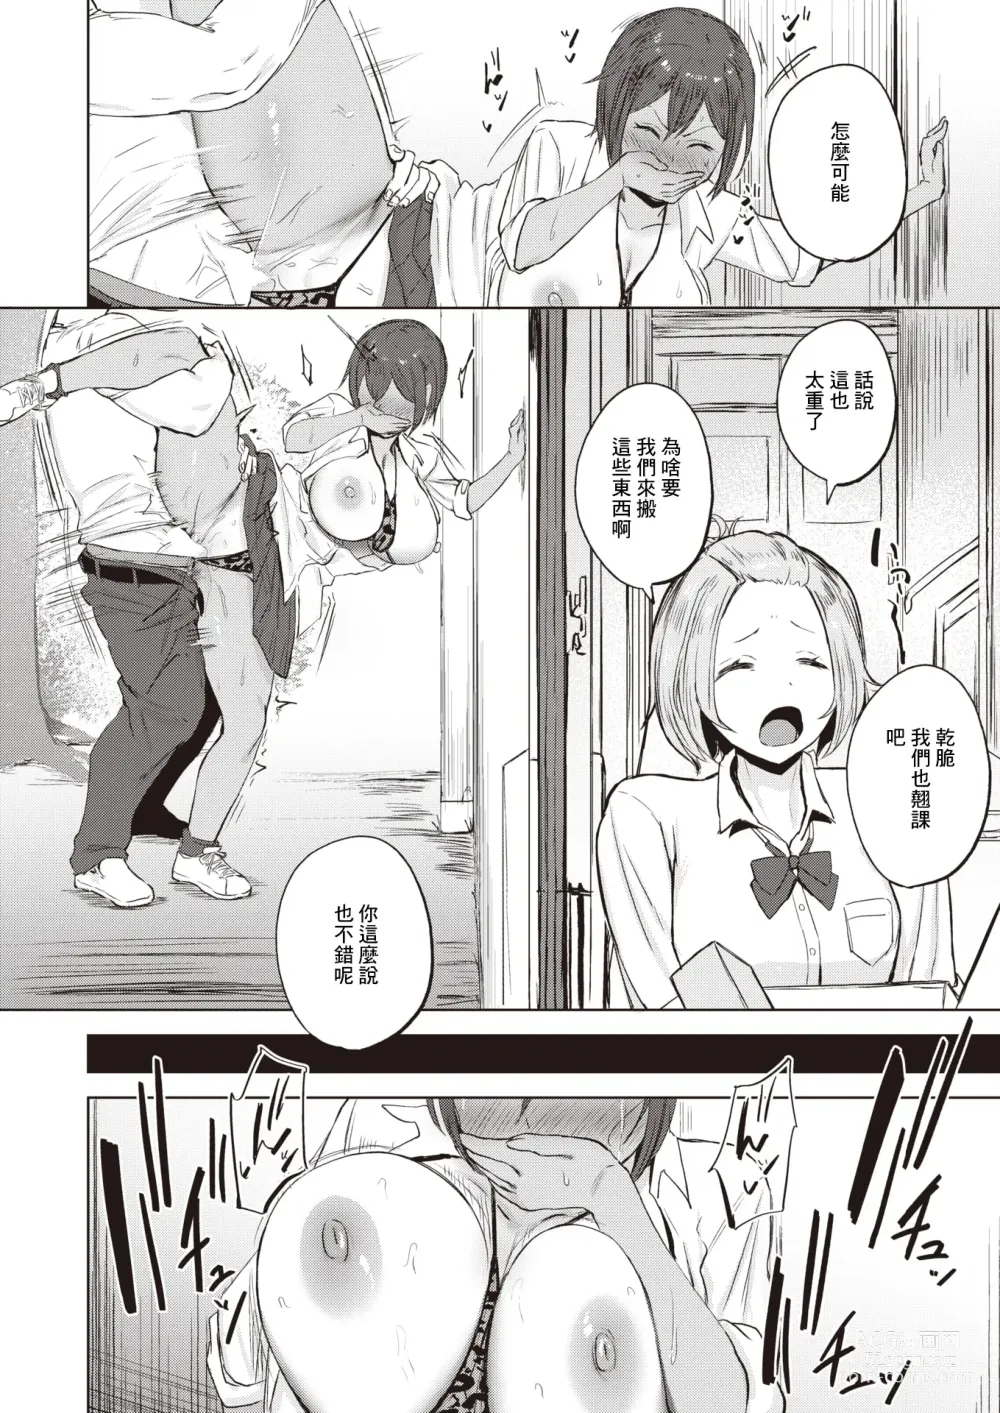 Page 25 of manga Kimochii  Koto  ni wa Sakaraenai - musclehead girl cant resist orgasm